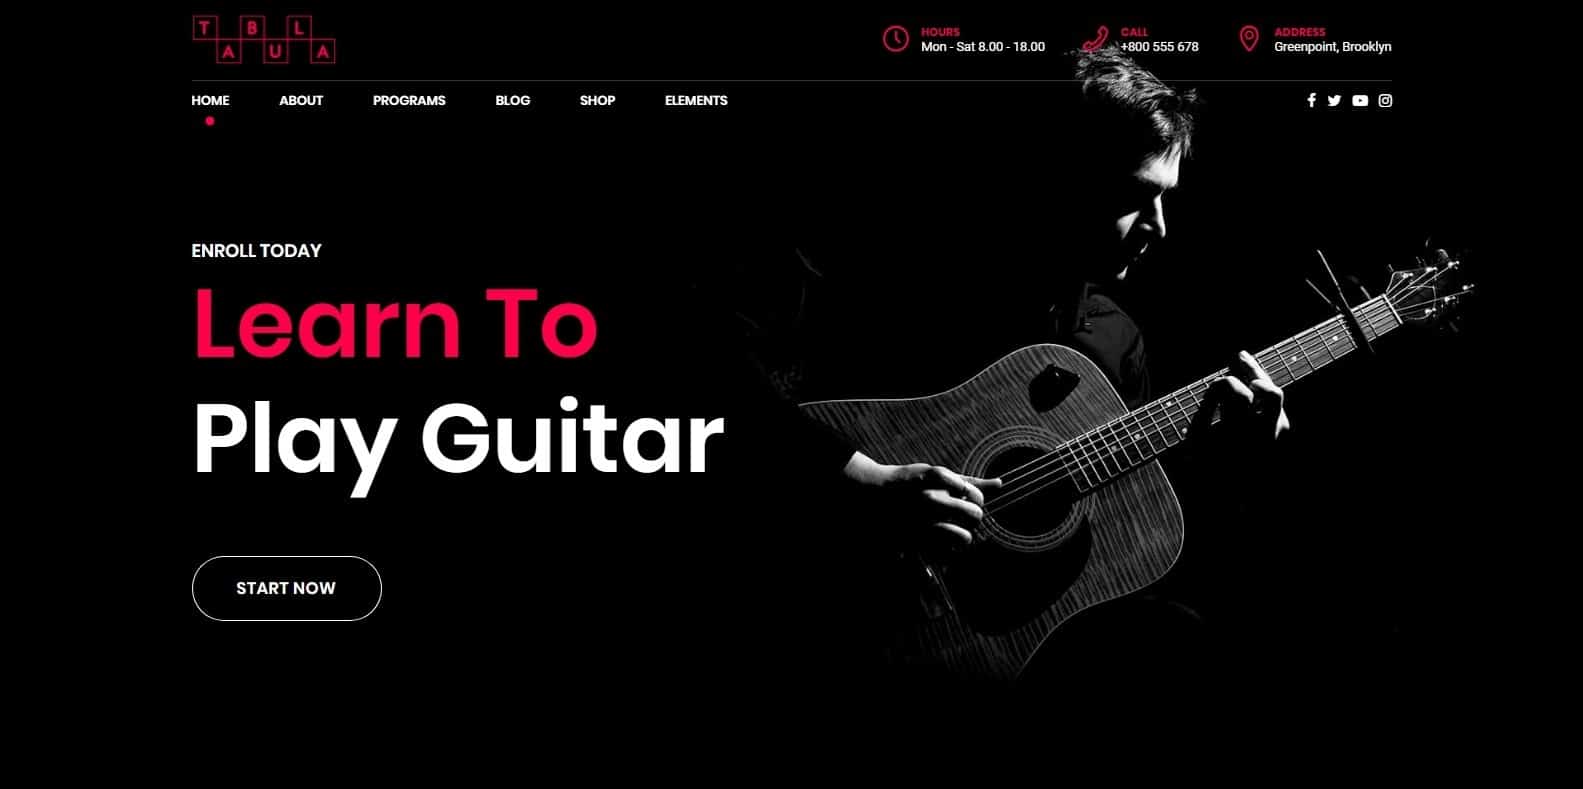 tabula-music-studio-website-template